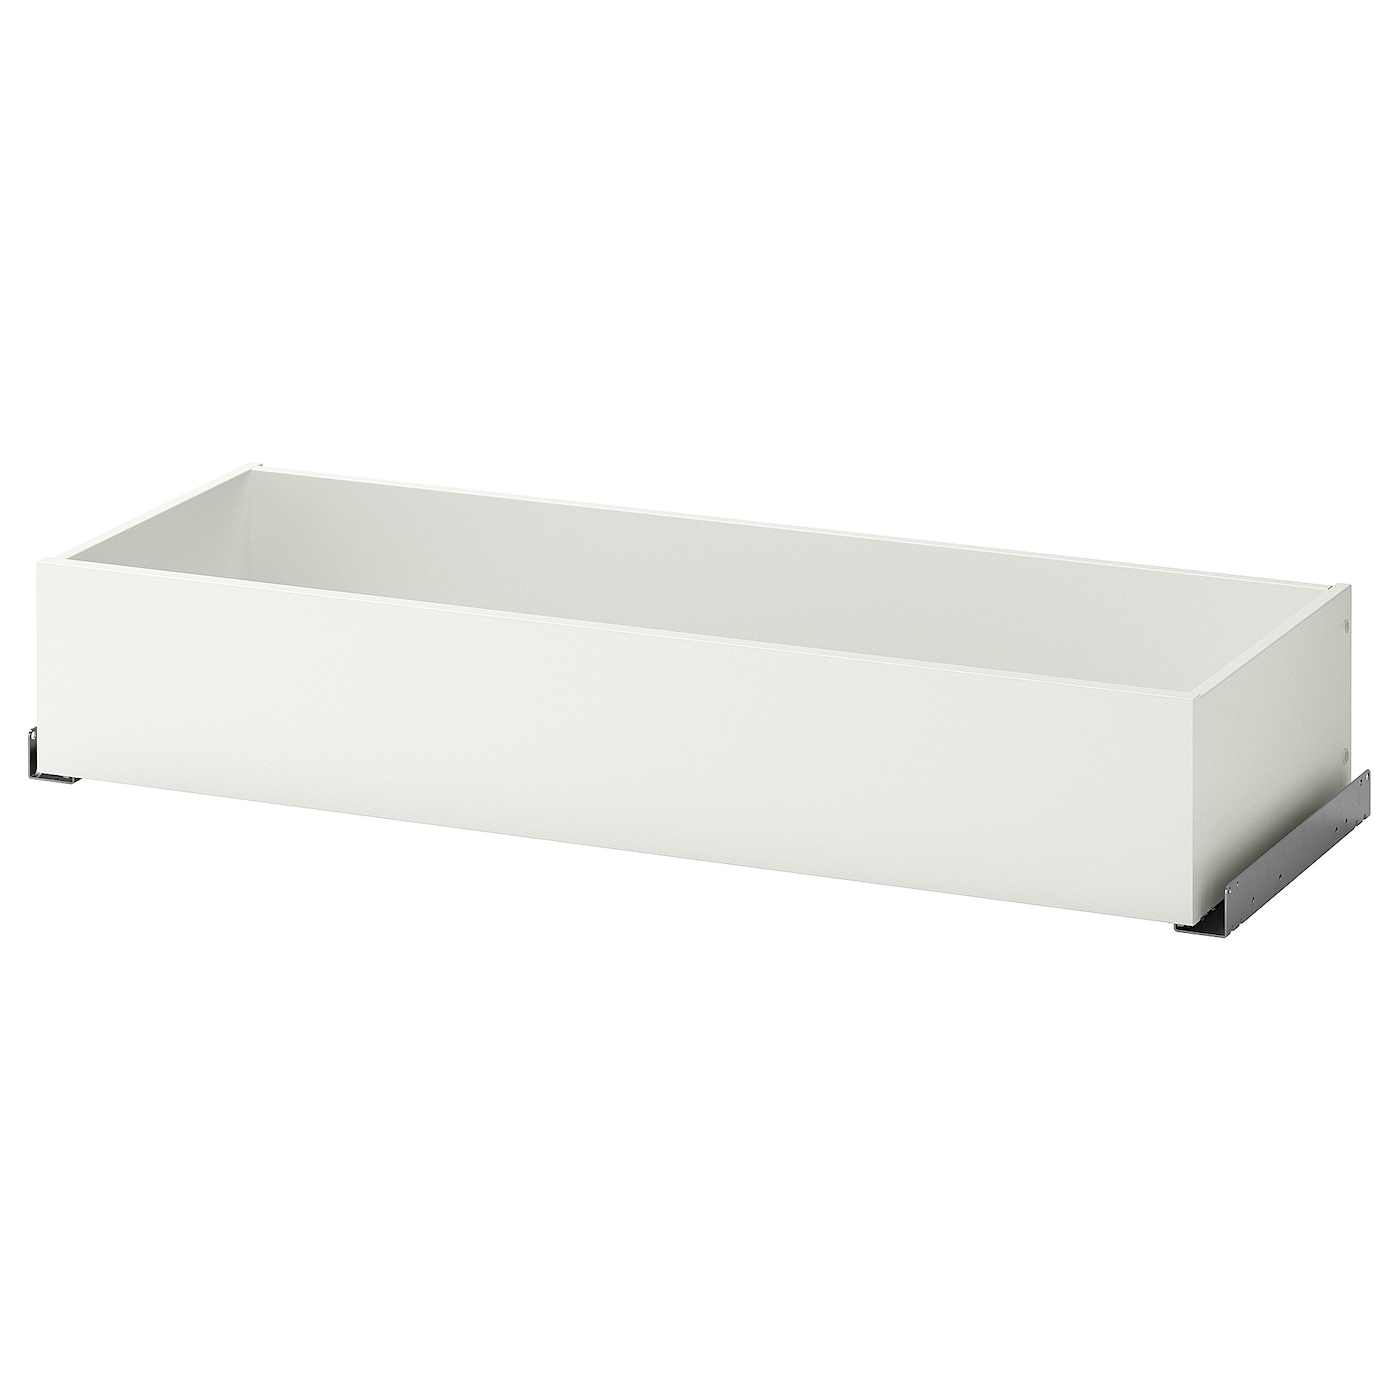 Ящик - IKEA KOMPLEMENT, 100x35 см, белый КОМПЛИМЕНТ ИКЕА